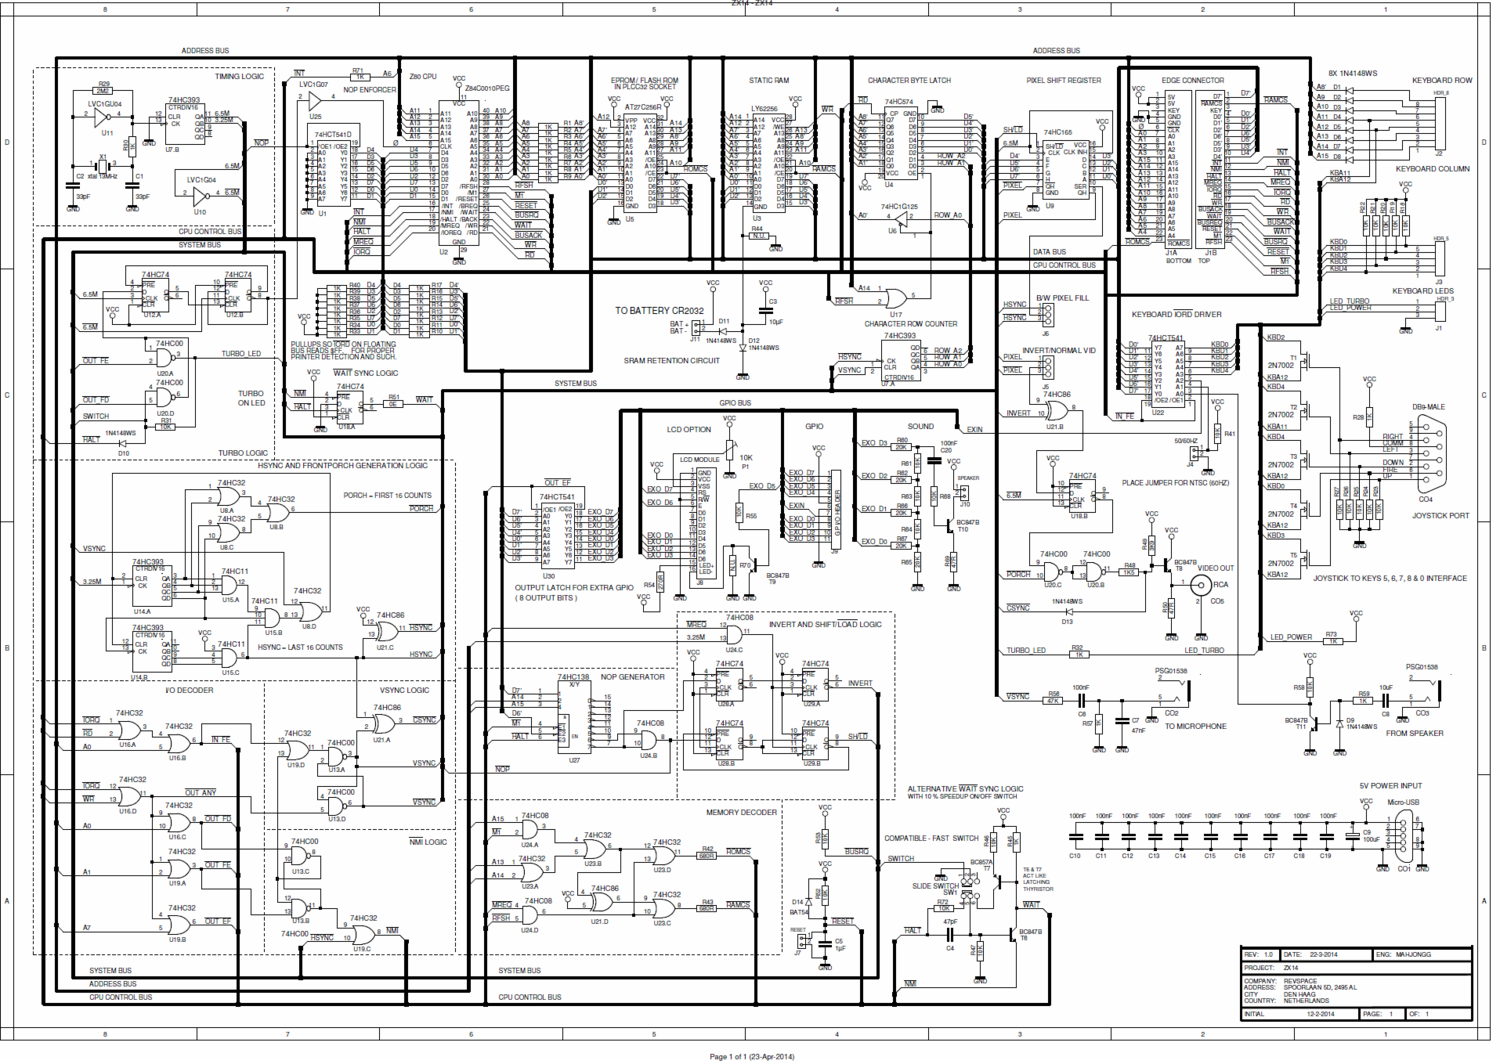 ZX14 schematic.png